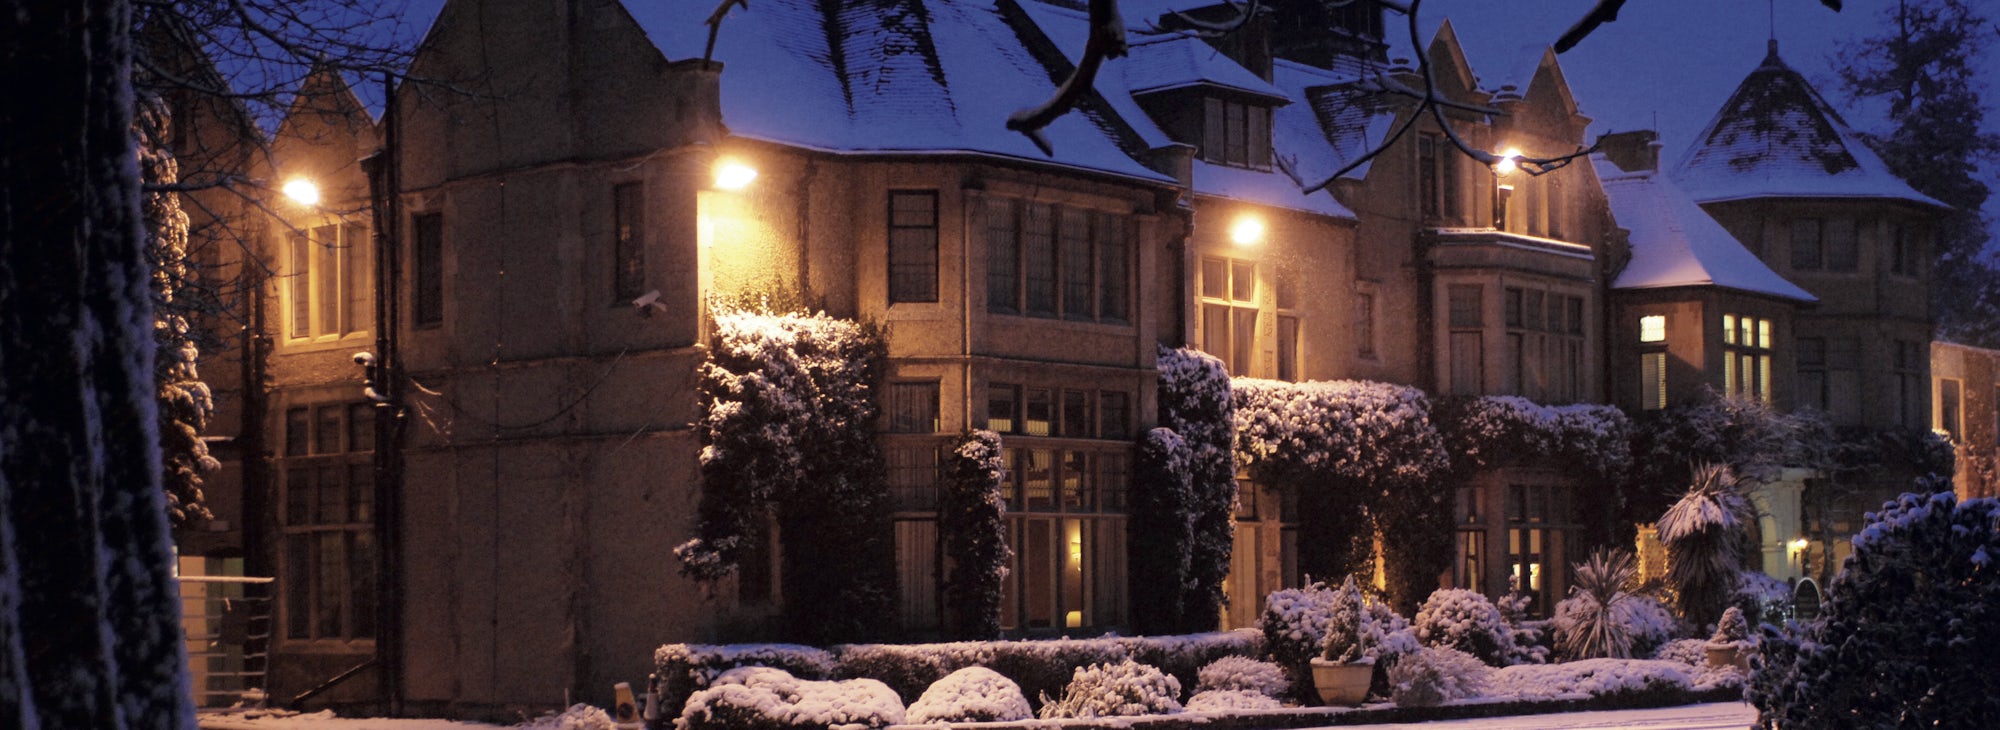 Frimley Hall Snow